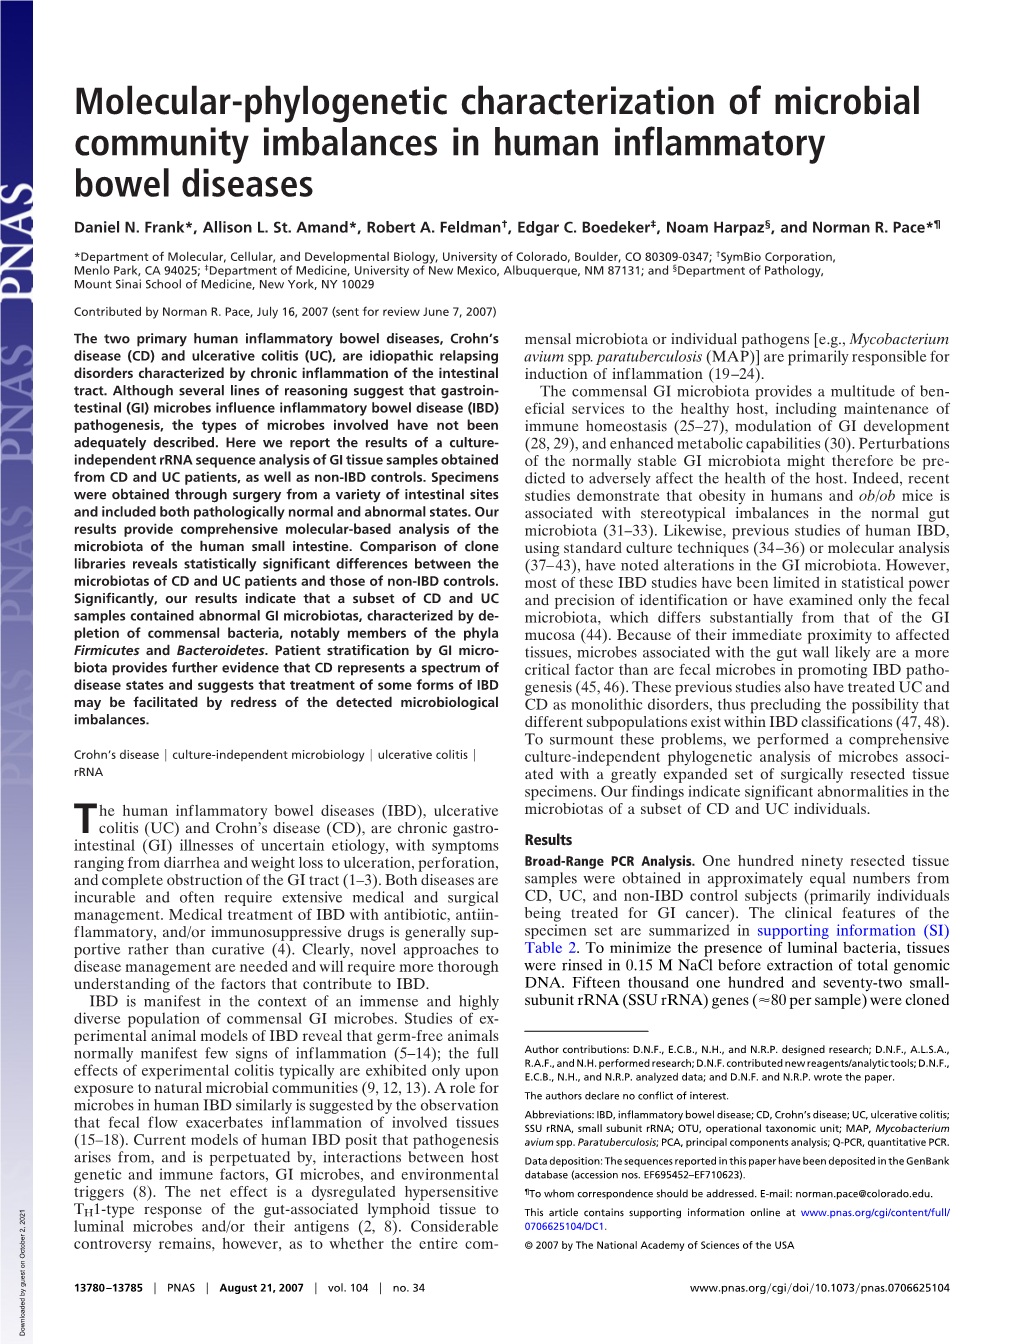 Molecular-Phylogenetic Characterization of Microbial Community Imbalances in Human Inflammatory Bowel Diseases